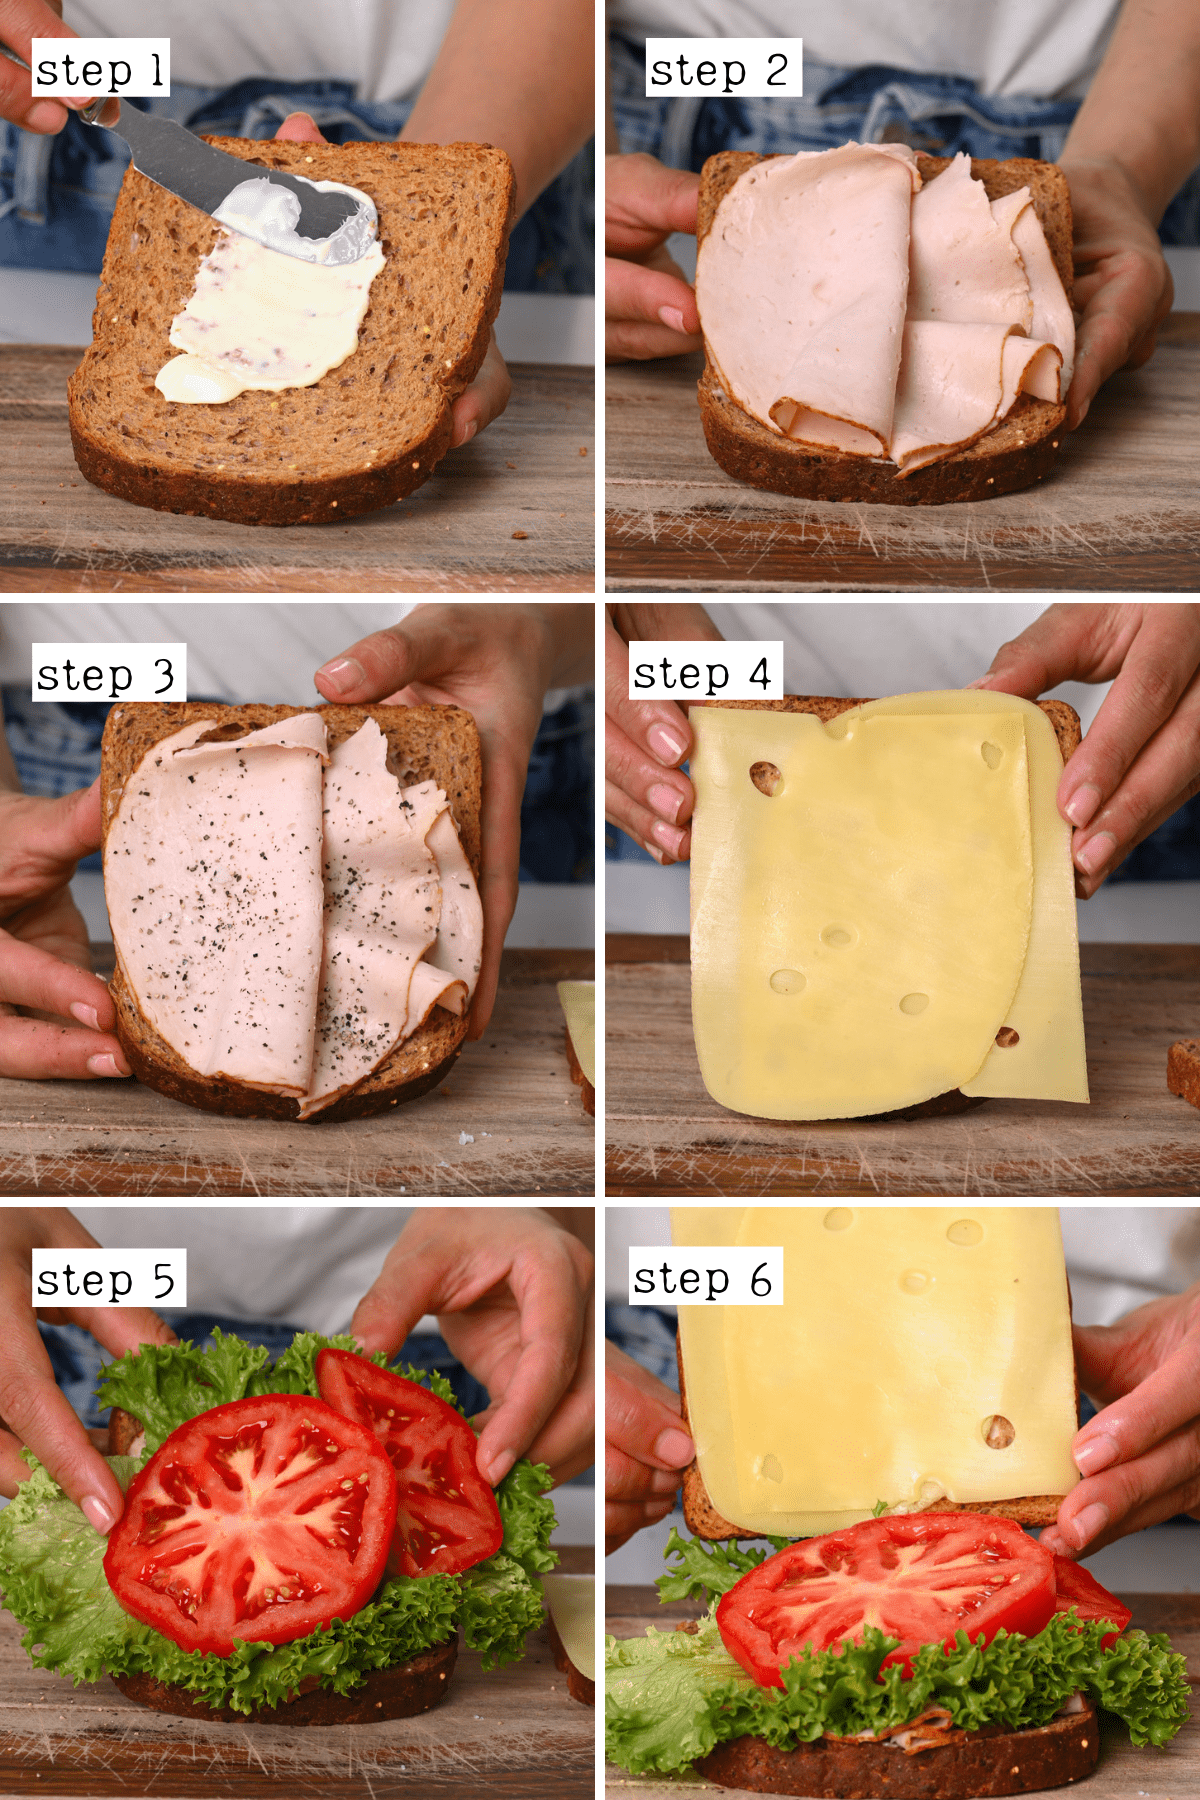 Steps for preparing turkey sandwich